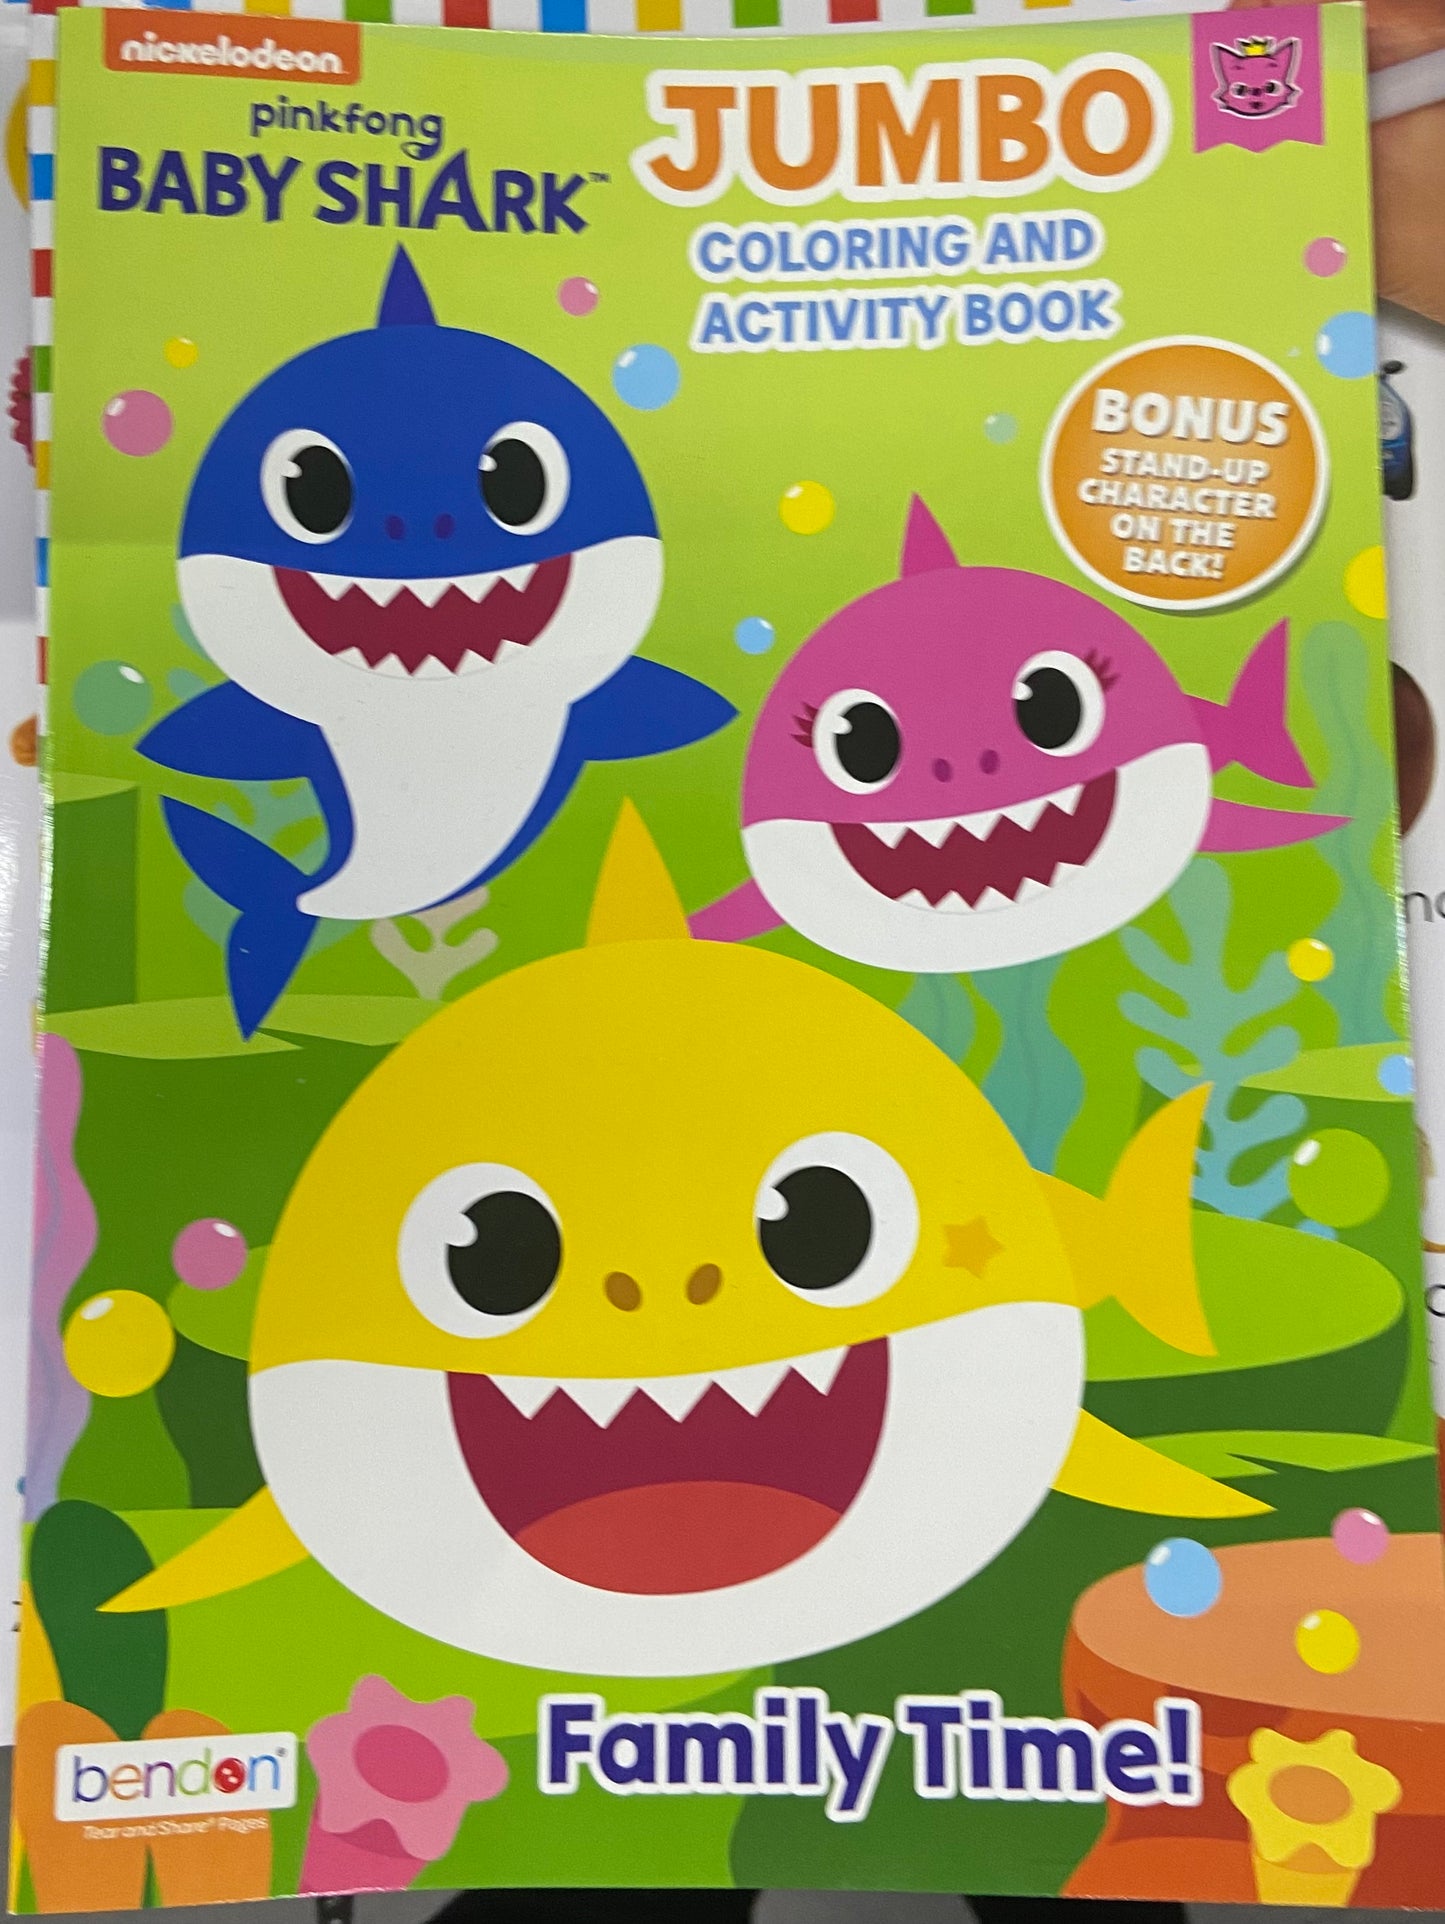 Baby Shark: Jumbo Coloring Book